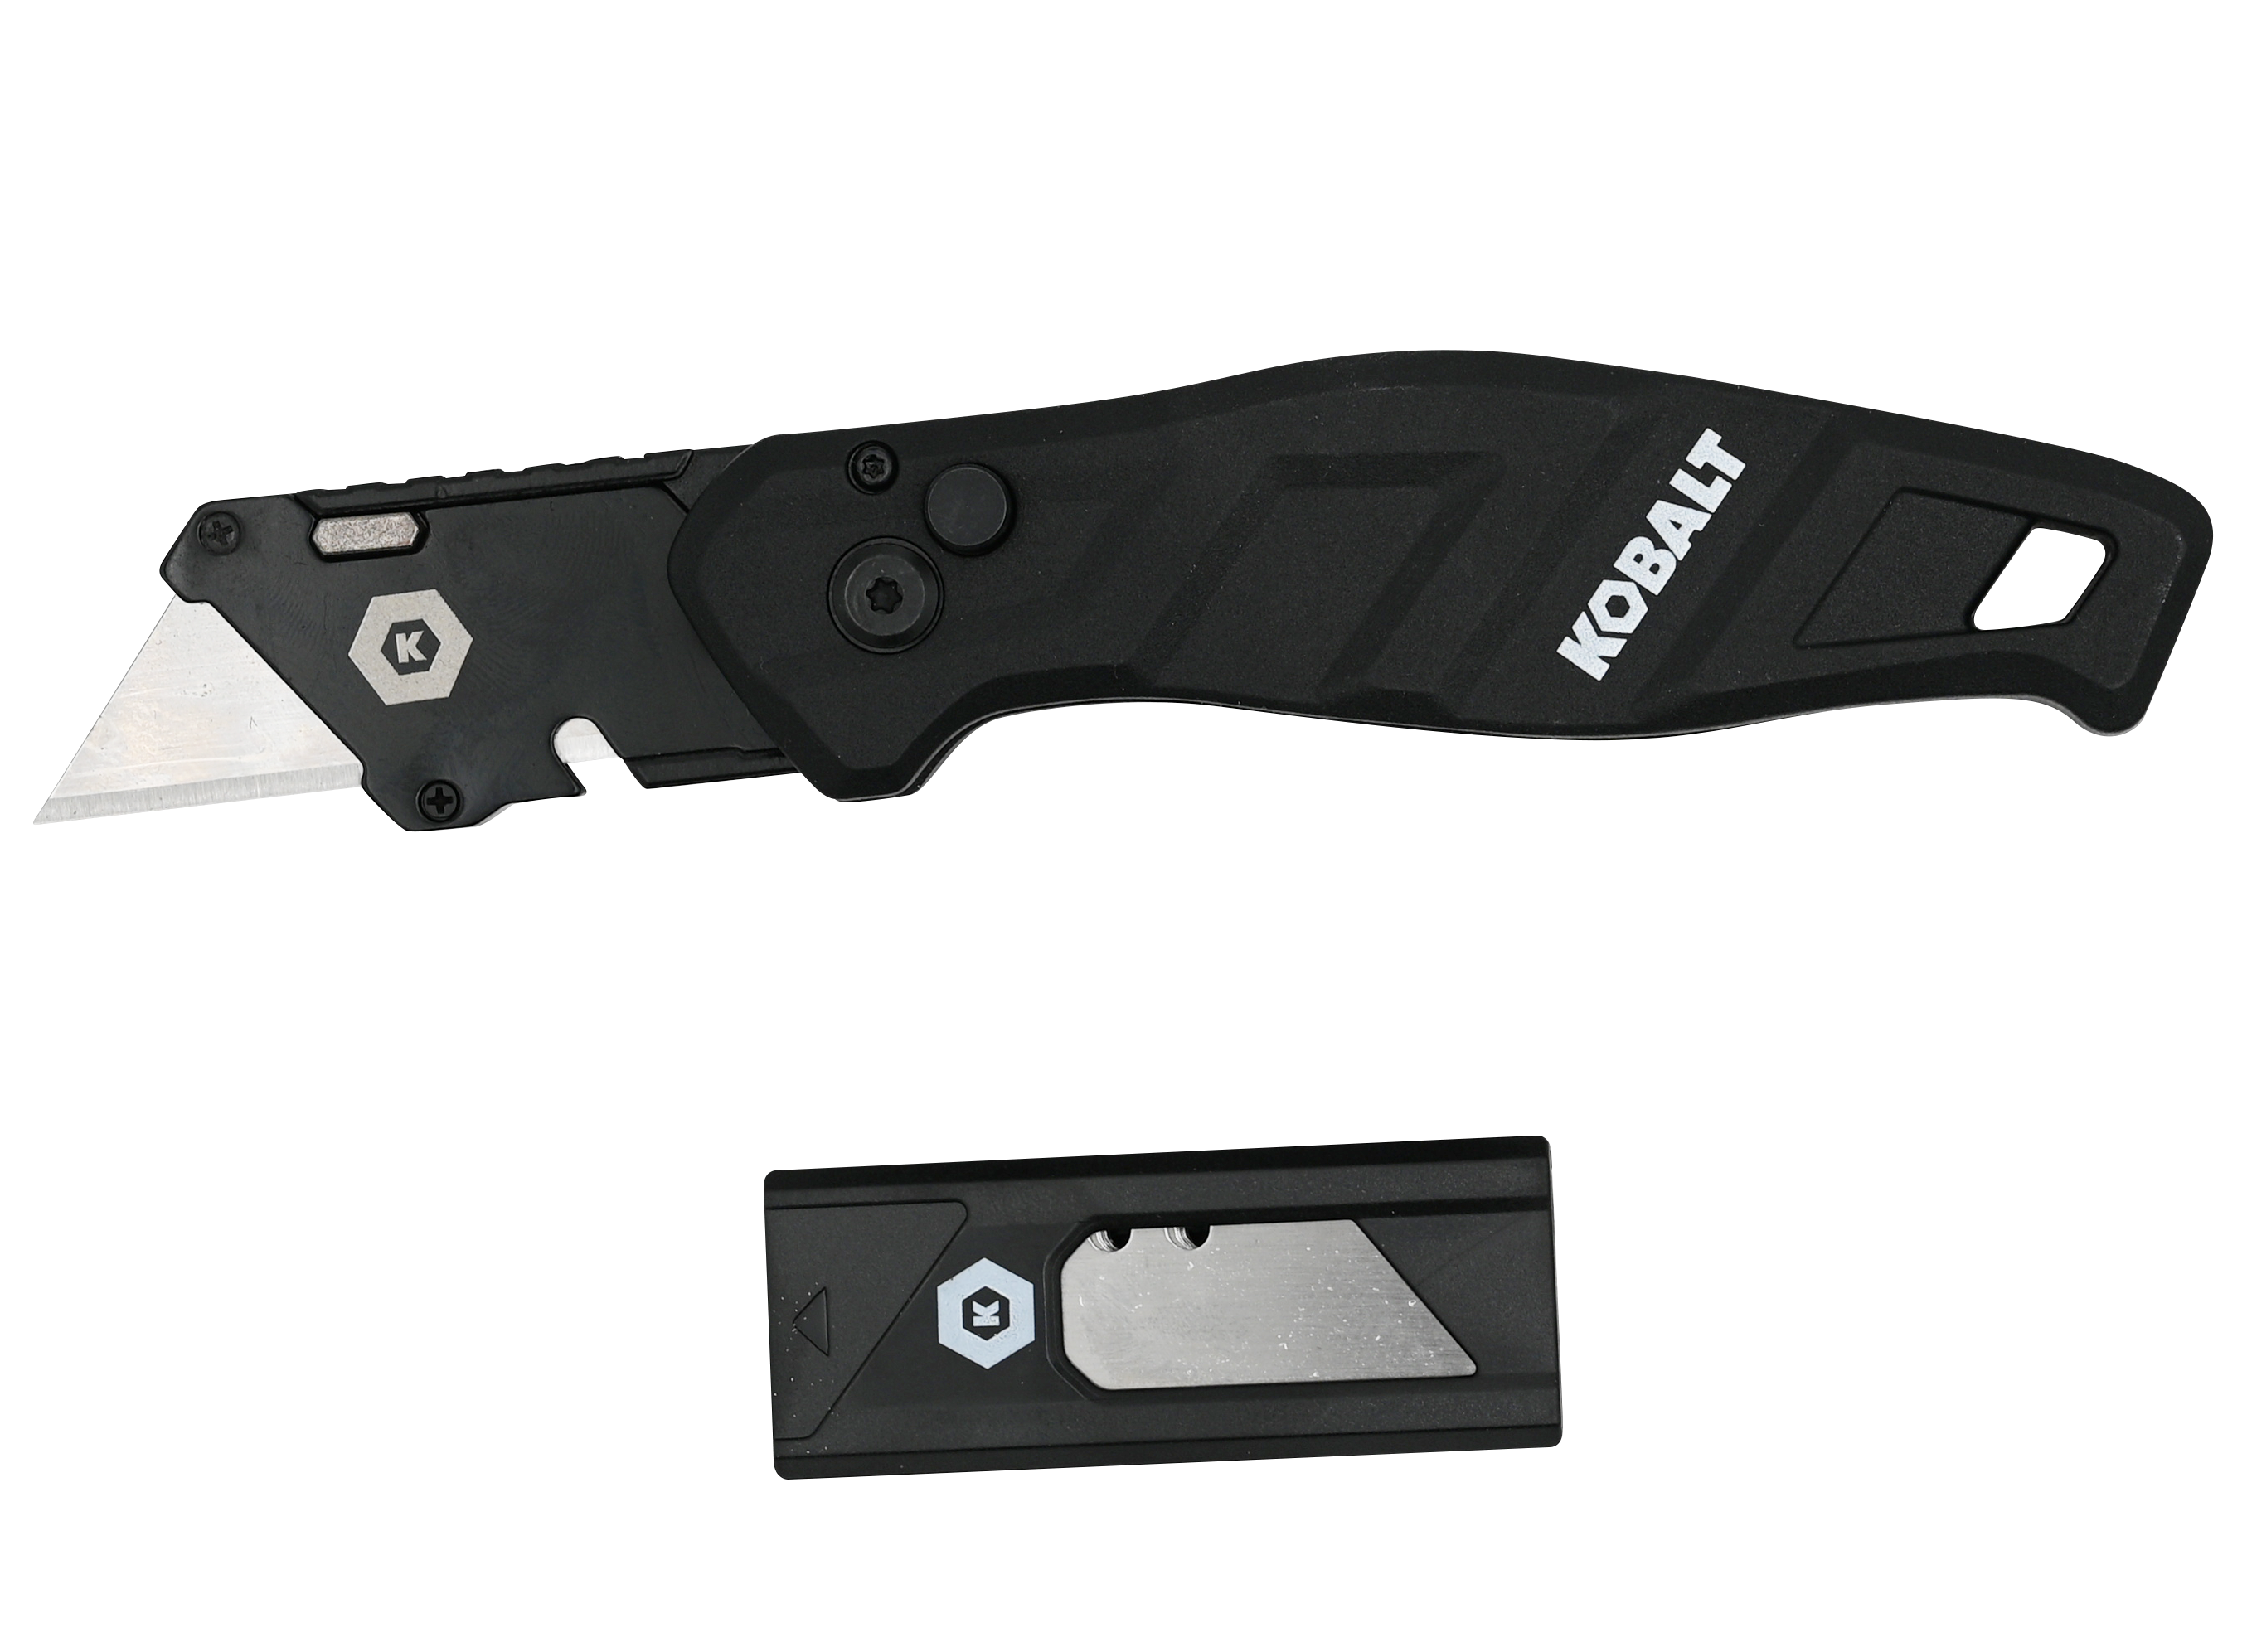 Kobalt Heavy Duty 18Mm 3-Blade Utility Knife with On Tool Blade